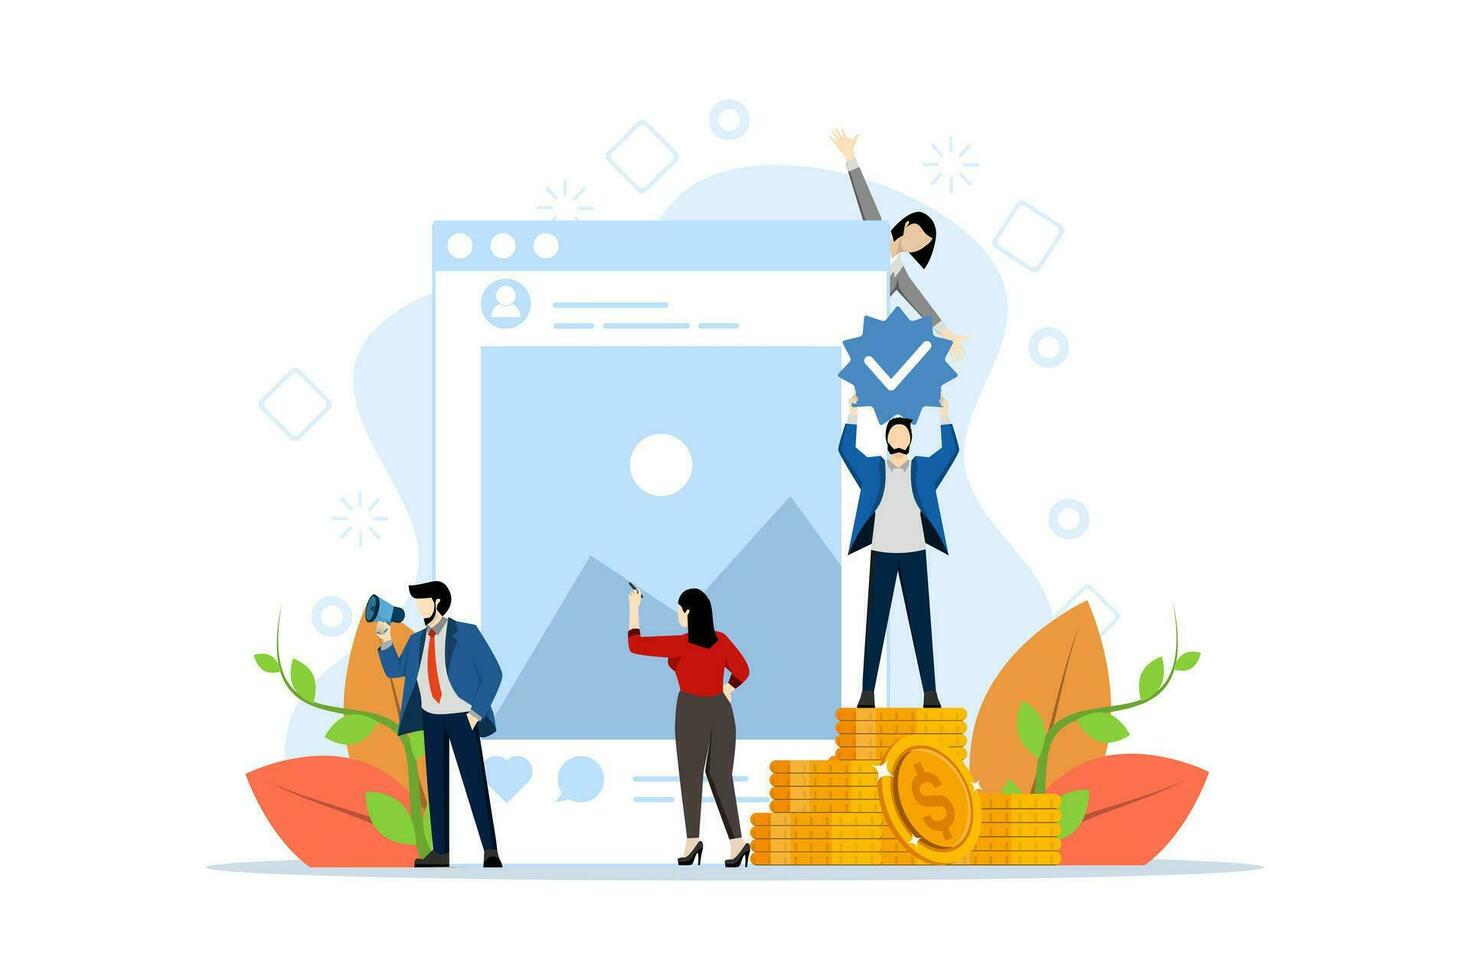 Blog monetization concept, earn money online, SMM team. Marketing team make money online on social media. Bloggers monetize blogs and share posts. Vector illustration on a white background.